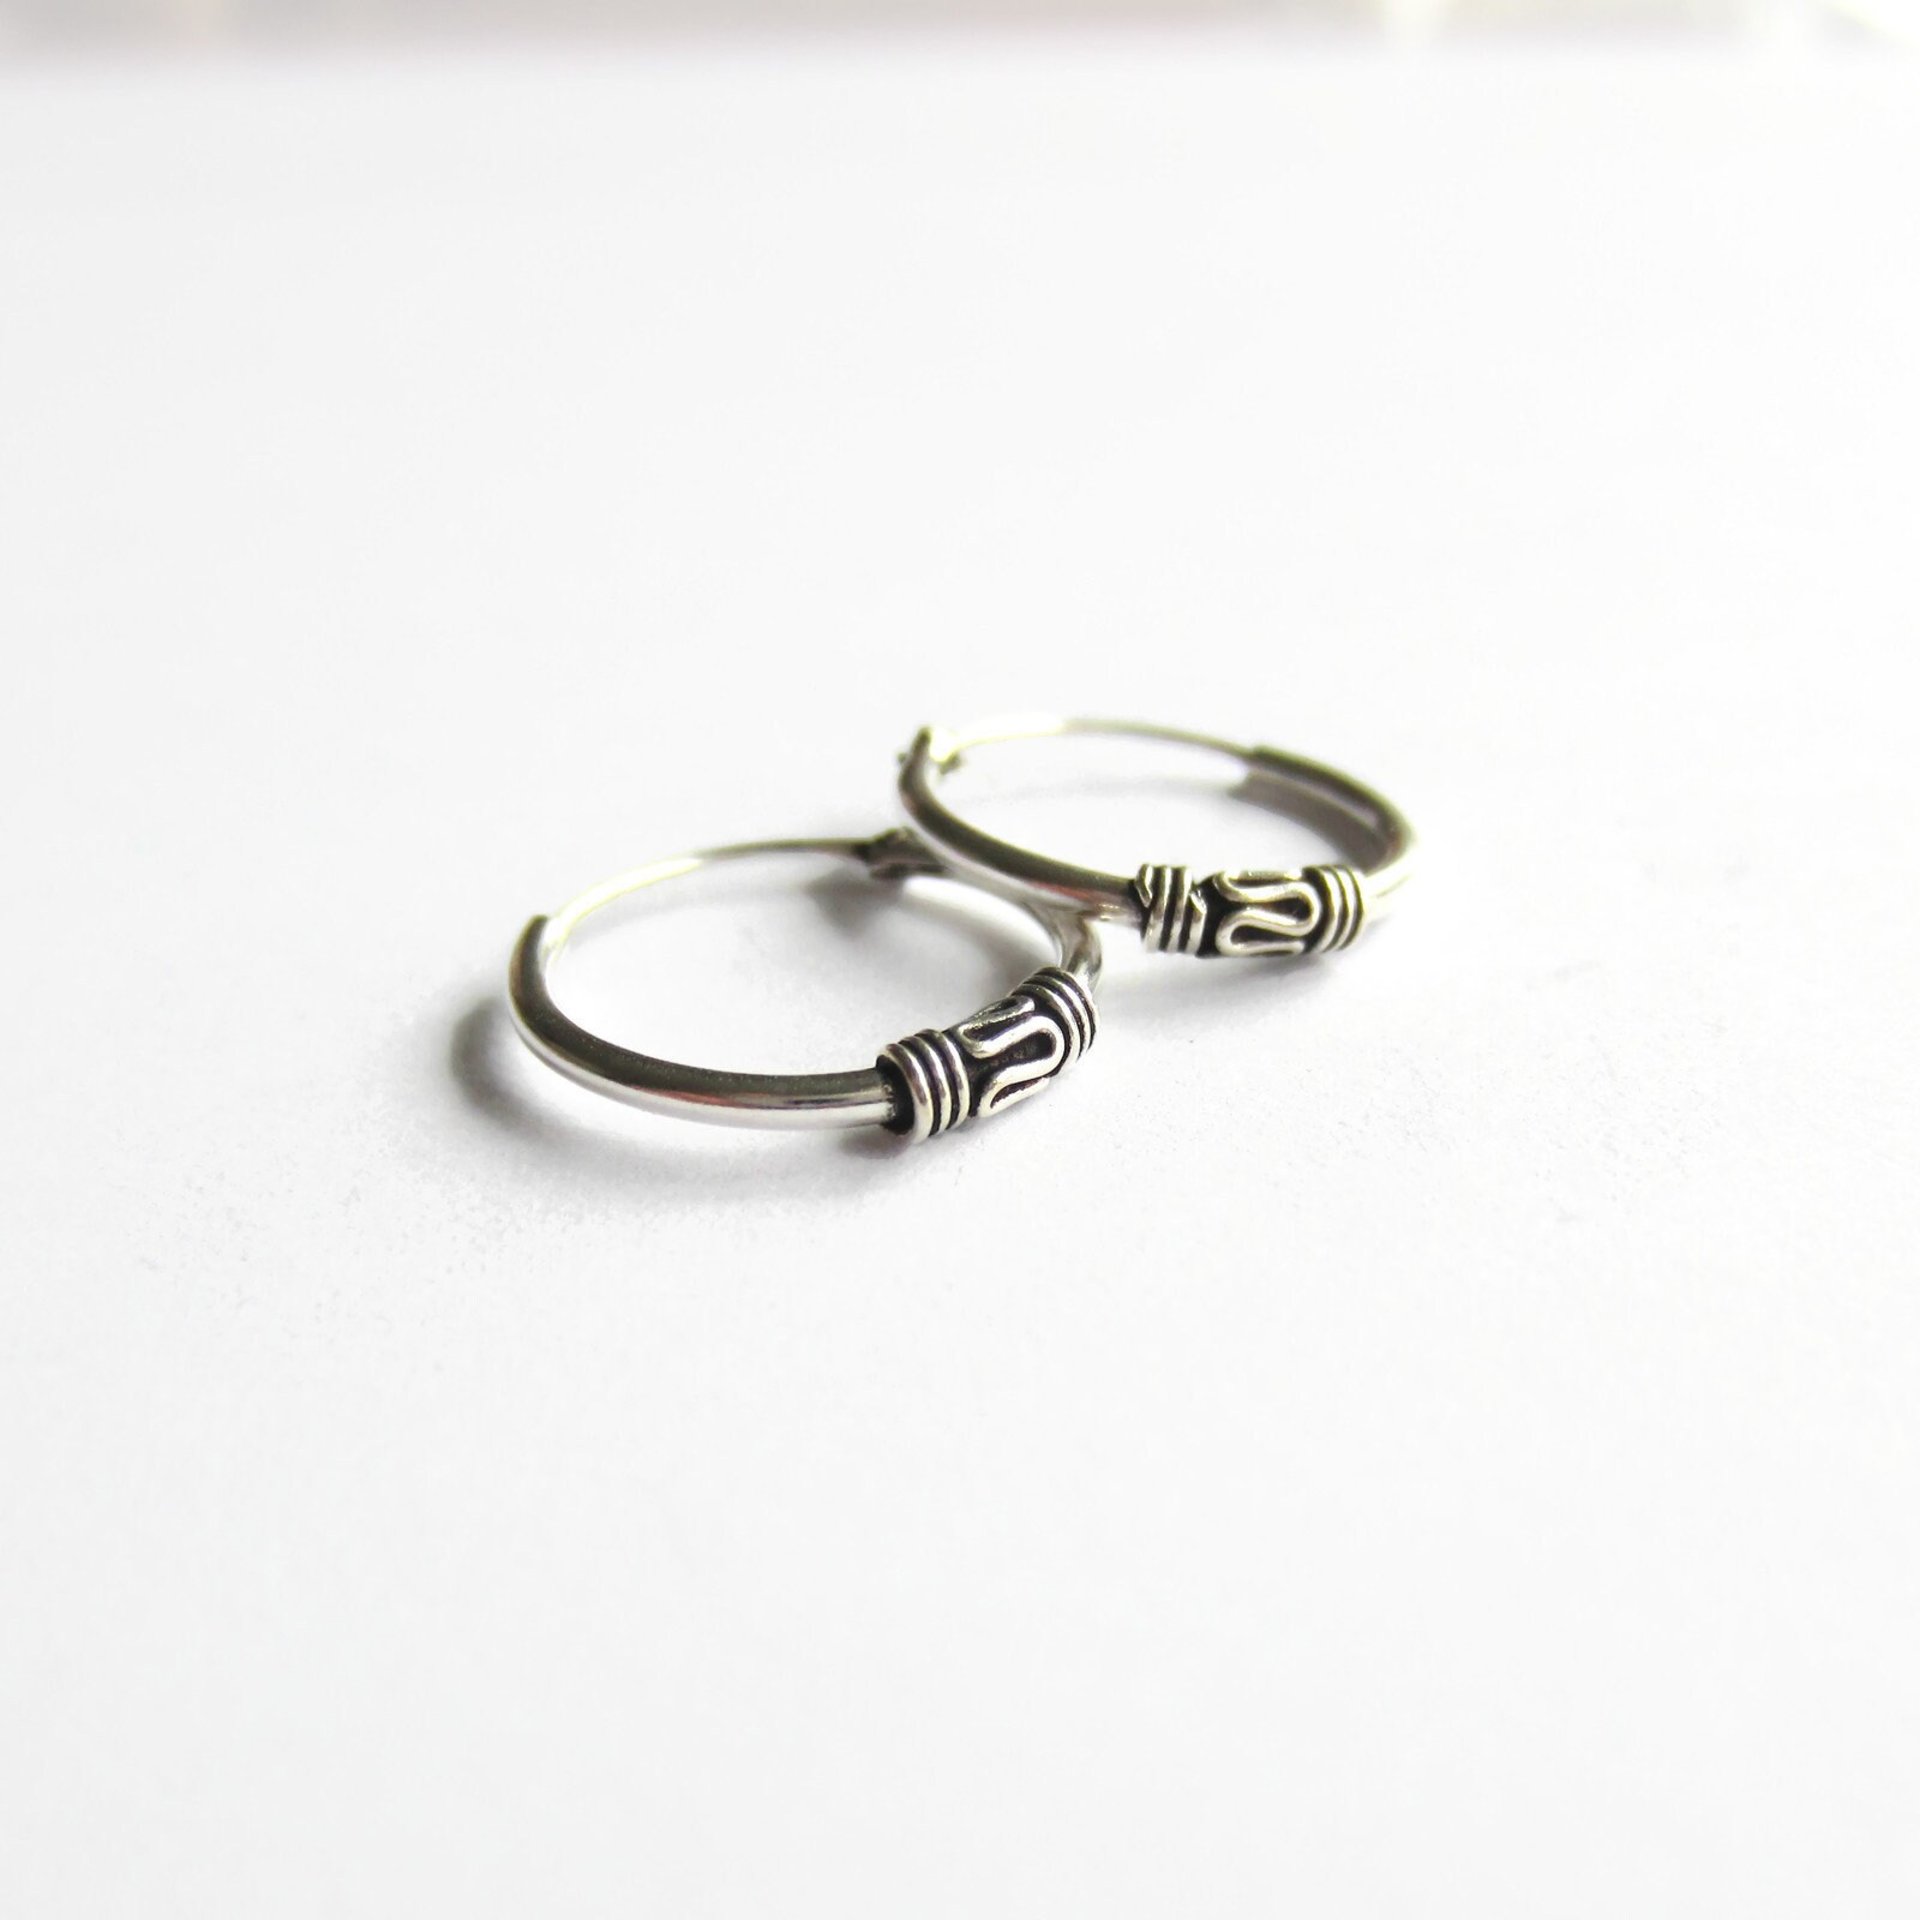 Pair of 14mm 925 Sterling Silver Bali Style Hoop Earrings ~ The Tiny Tree Frog Jewellery